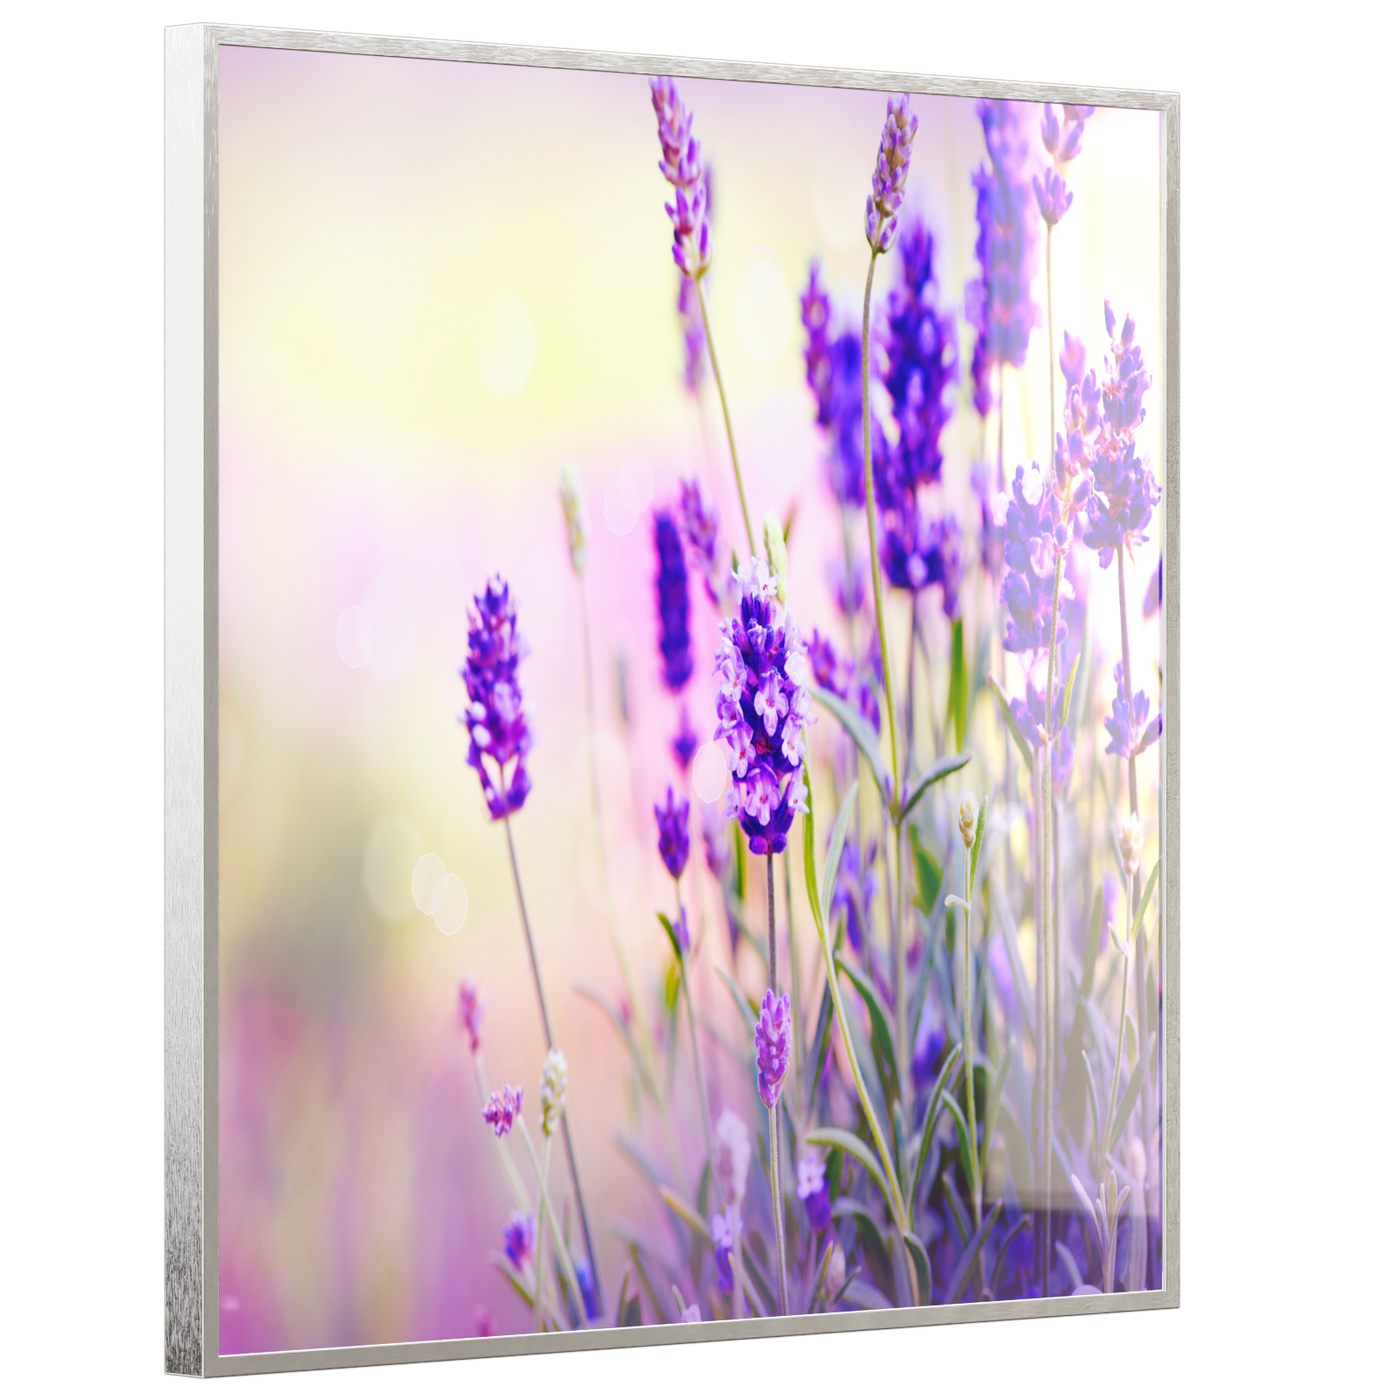 STEINFELD Deko Glas Wandbild Motiv 061 Lavendel